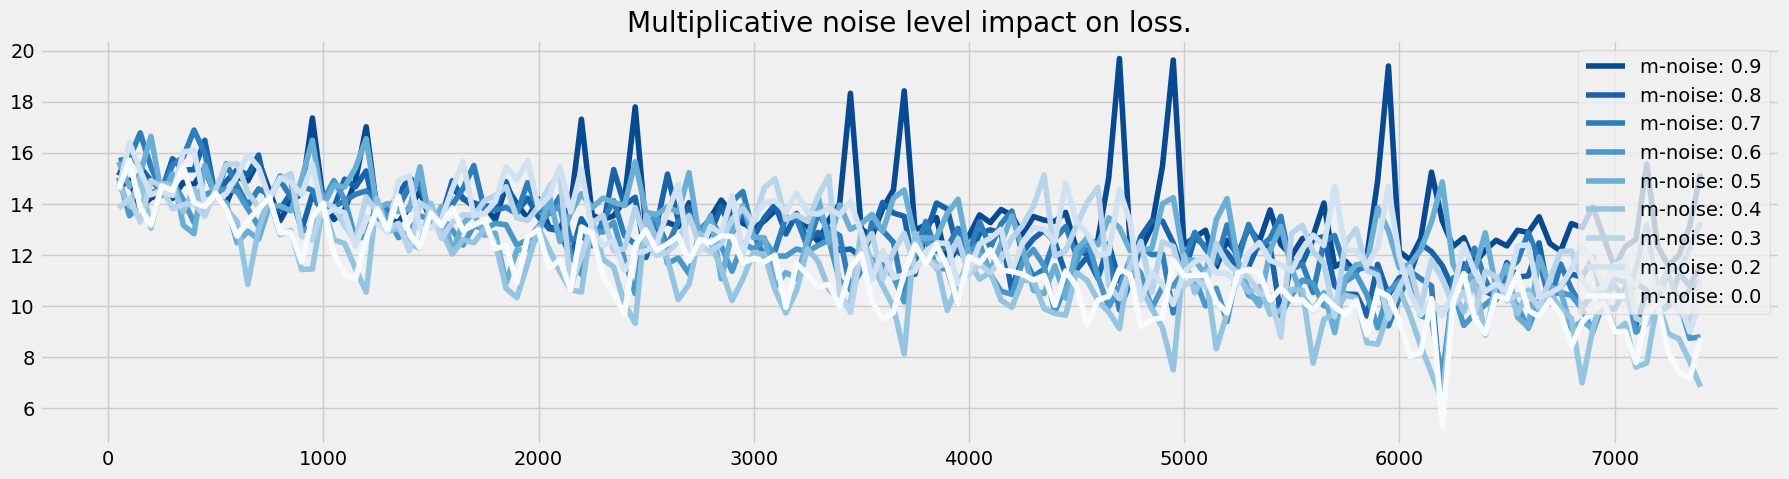 Multiplicative noise